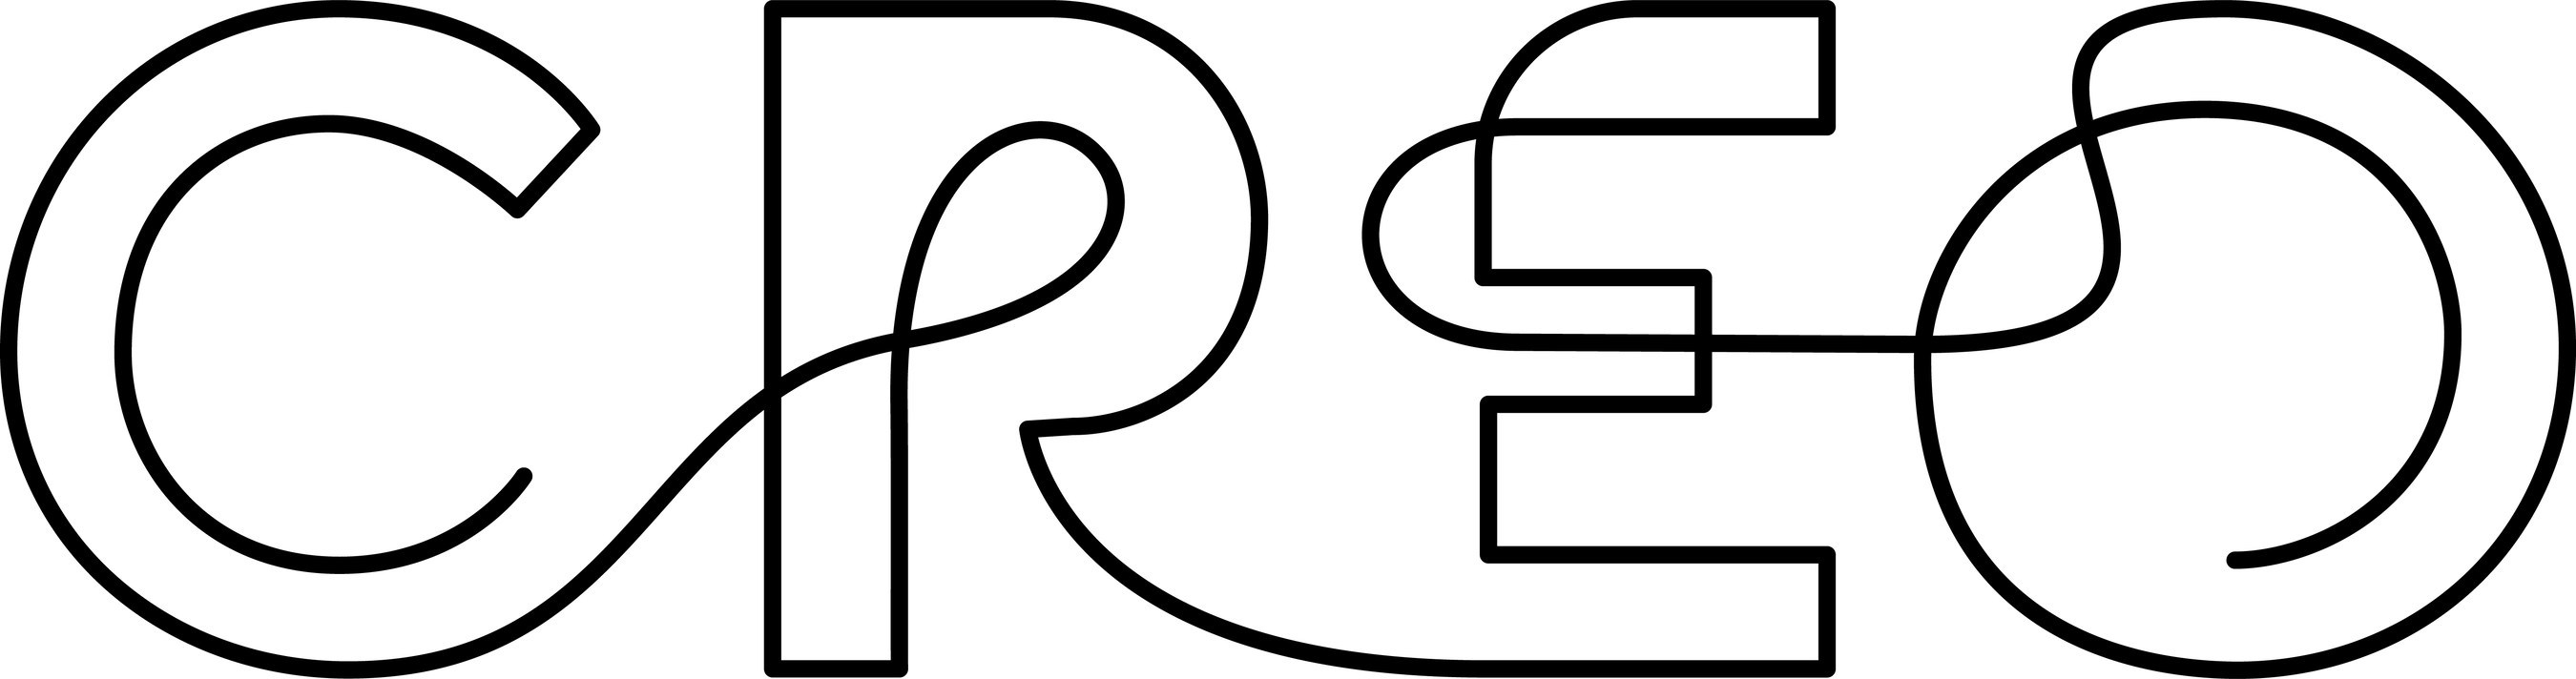 CreoLogo_Logo.jpg